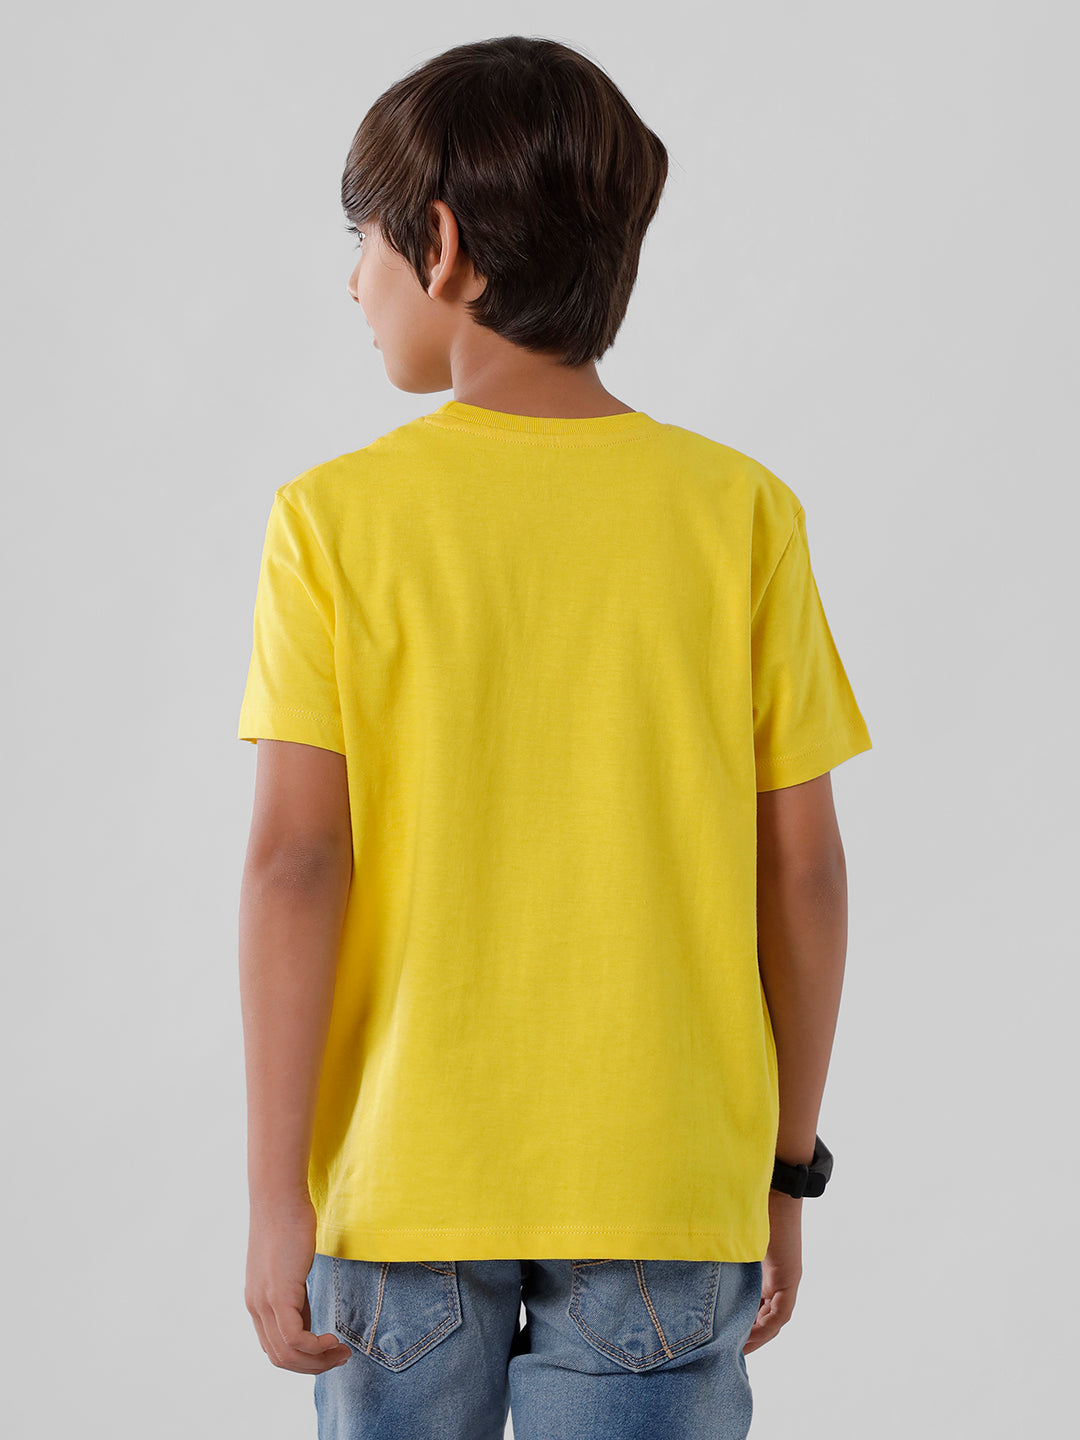 Kids - Boys Printed Half Sleeve T-Shirt Dark Yellow